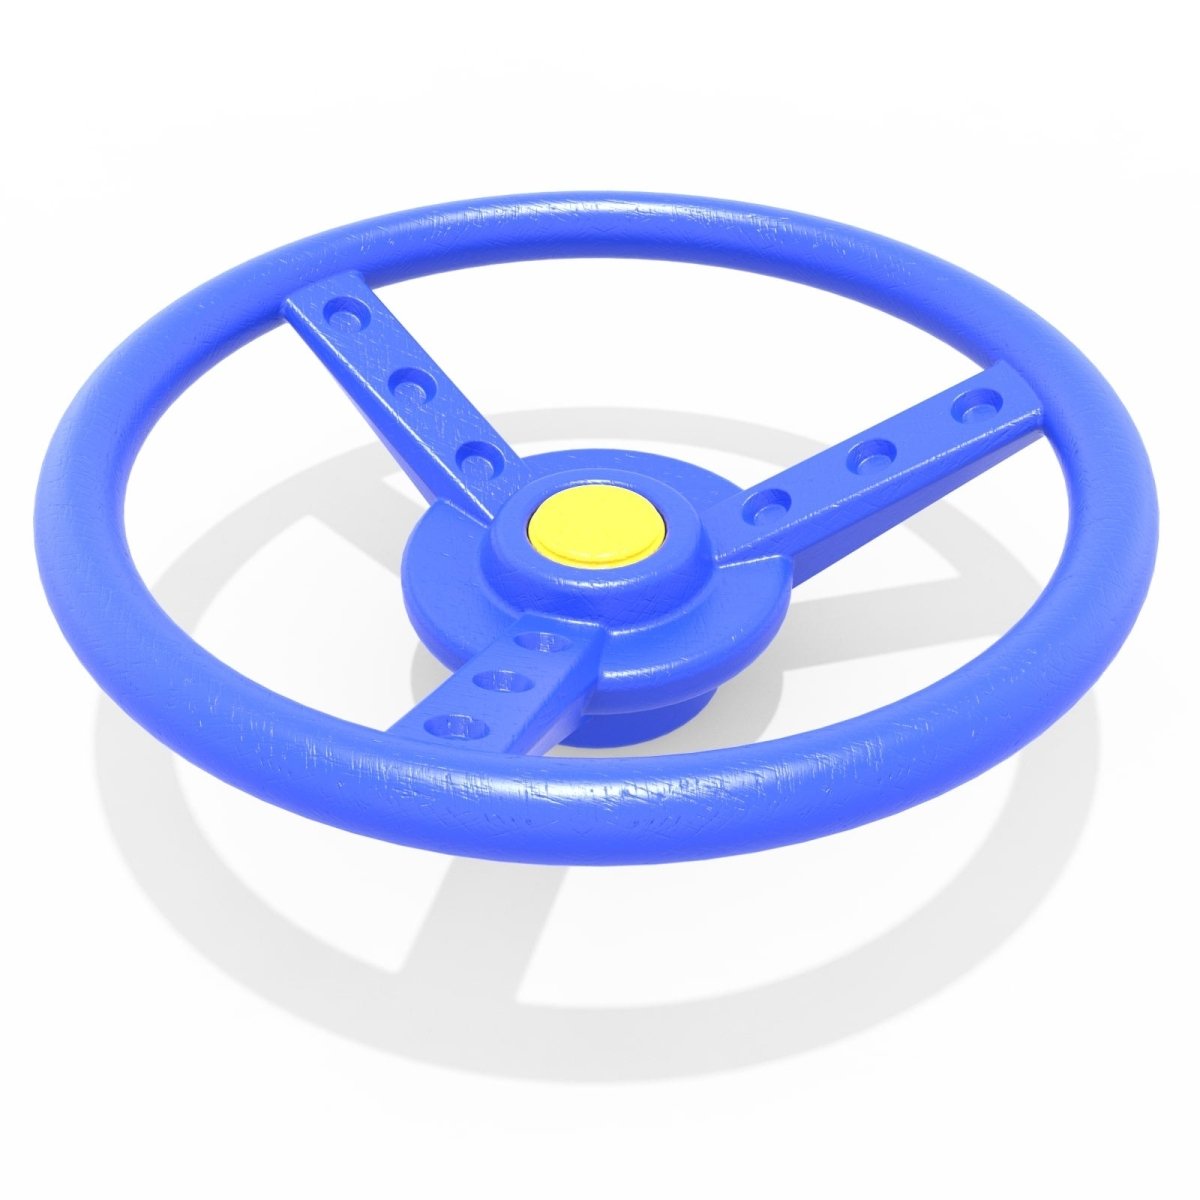 Rebo Garden Climbing Frame Accessories Plastic Steering Wheel - Blue